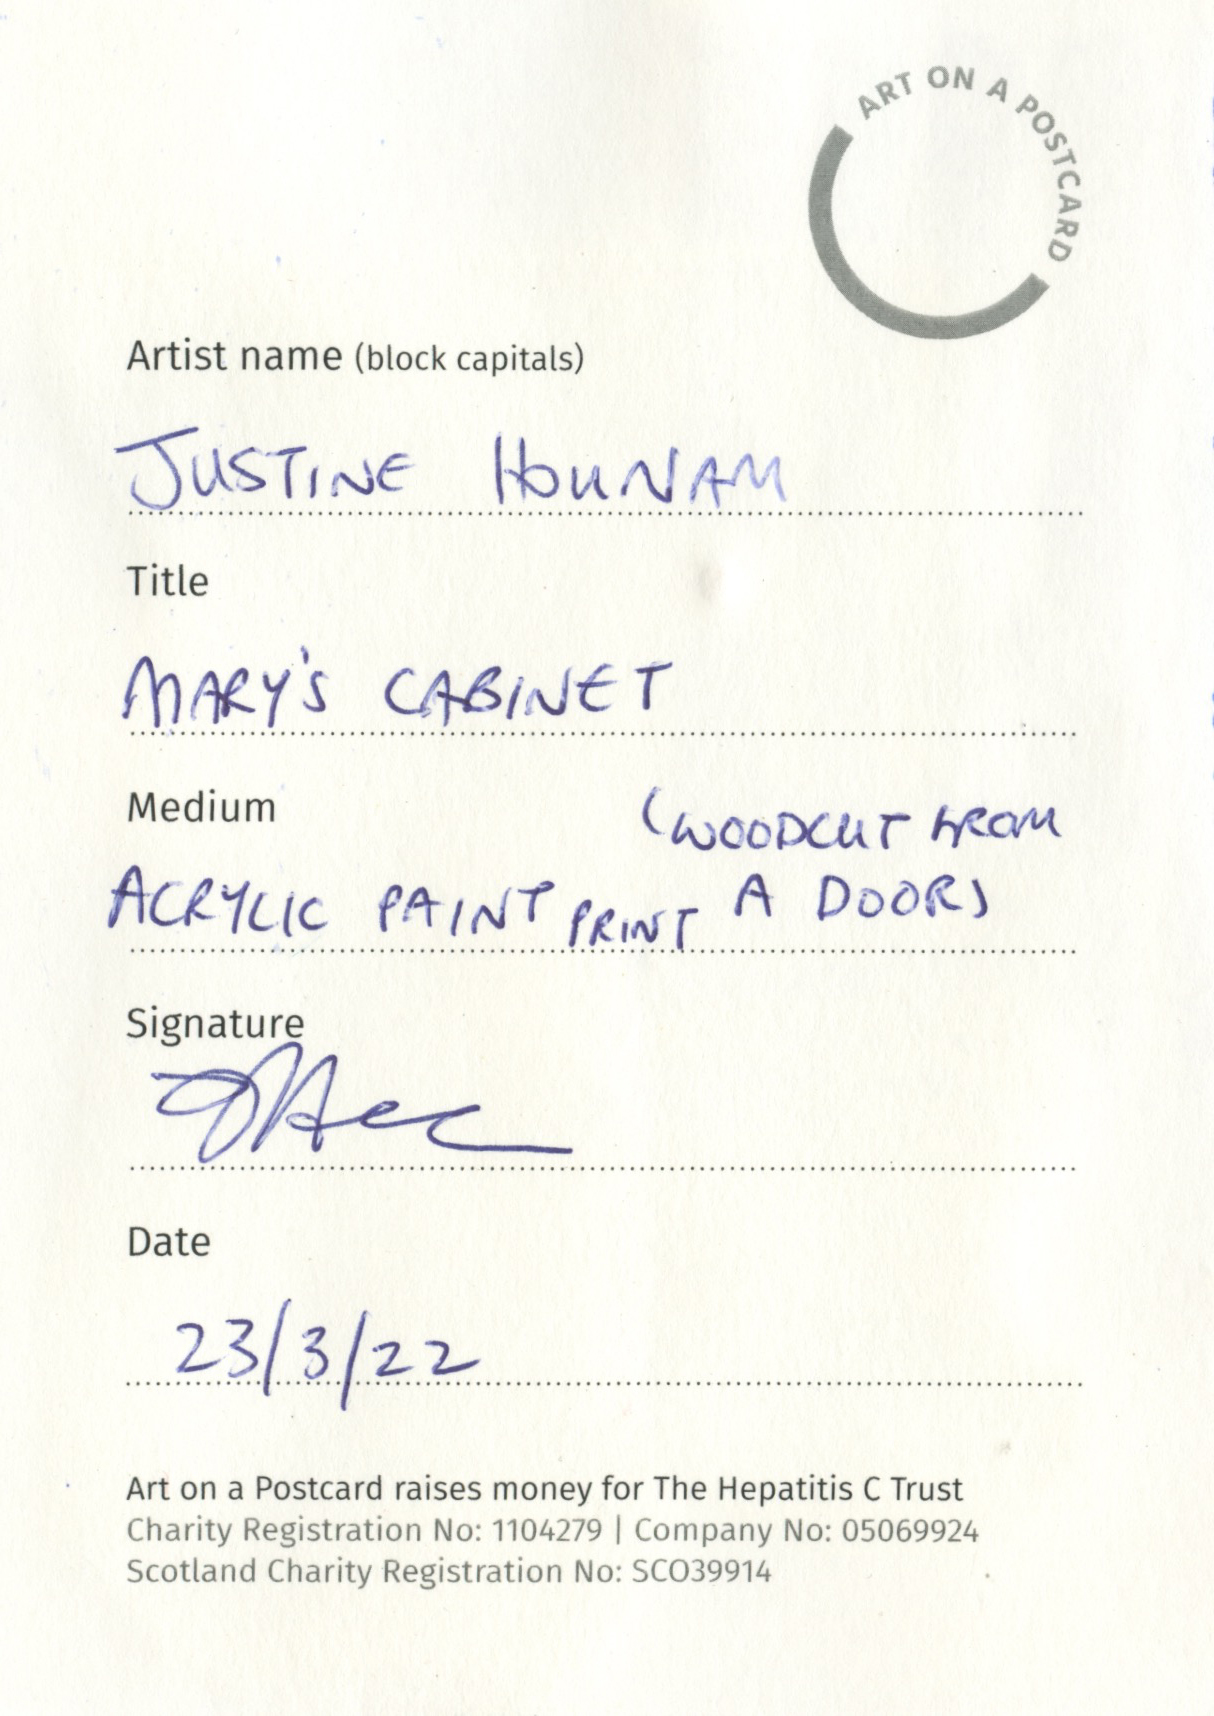 67. Justine Hounam - Mary's Cabinet (1) - BACK